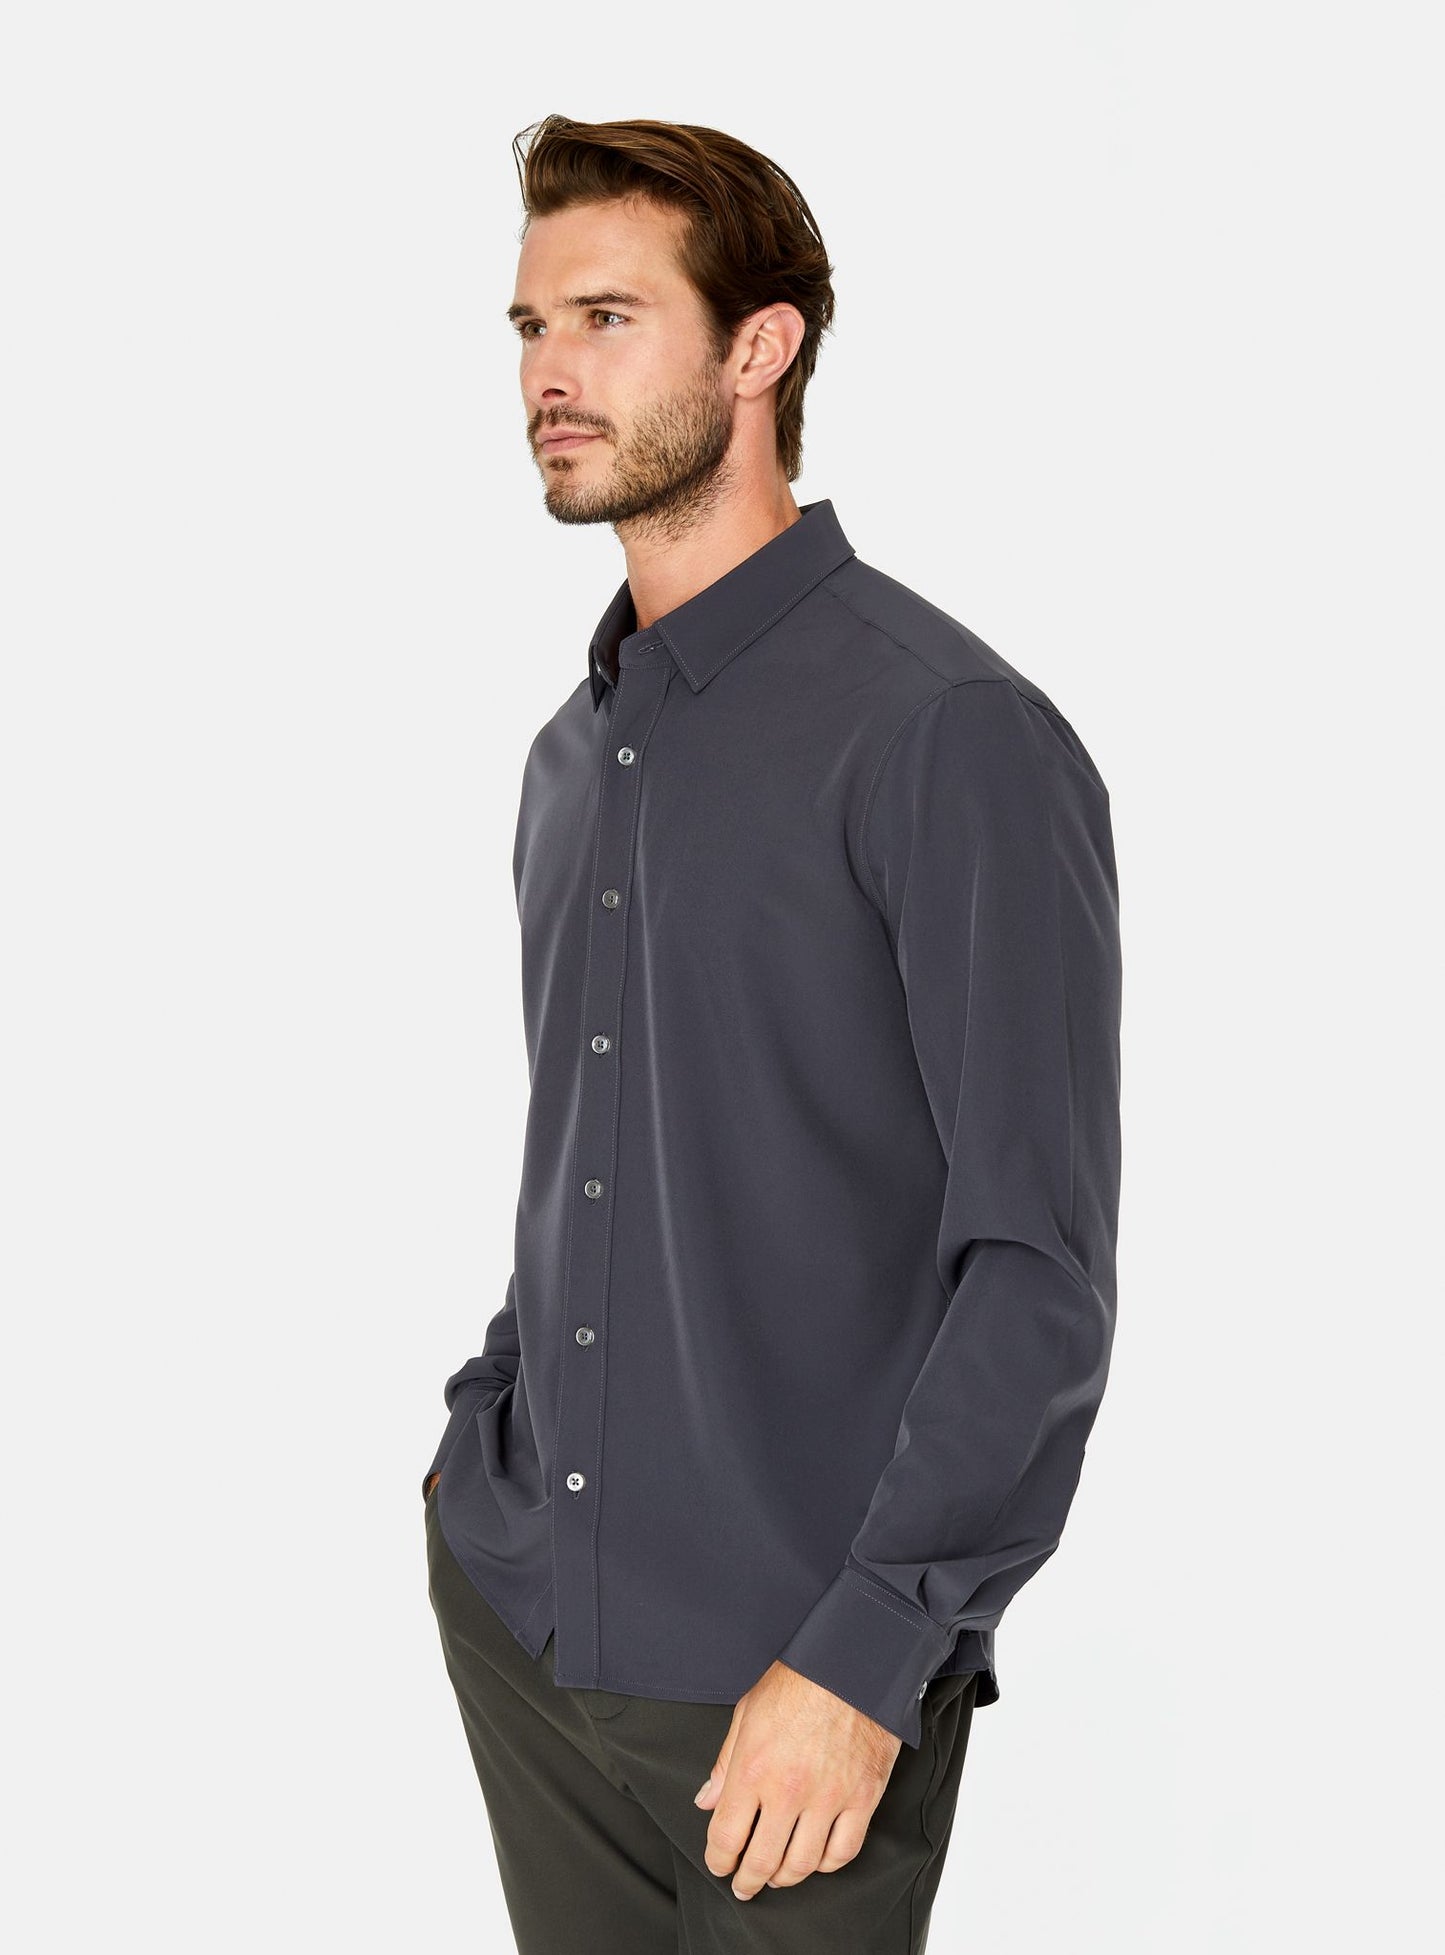 Liberty Long Sleeve Shirt - Charcoal